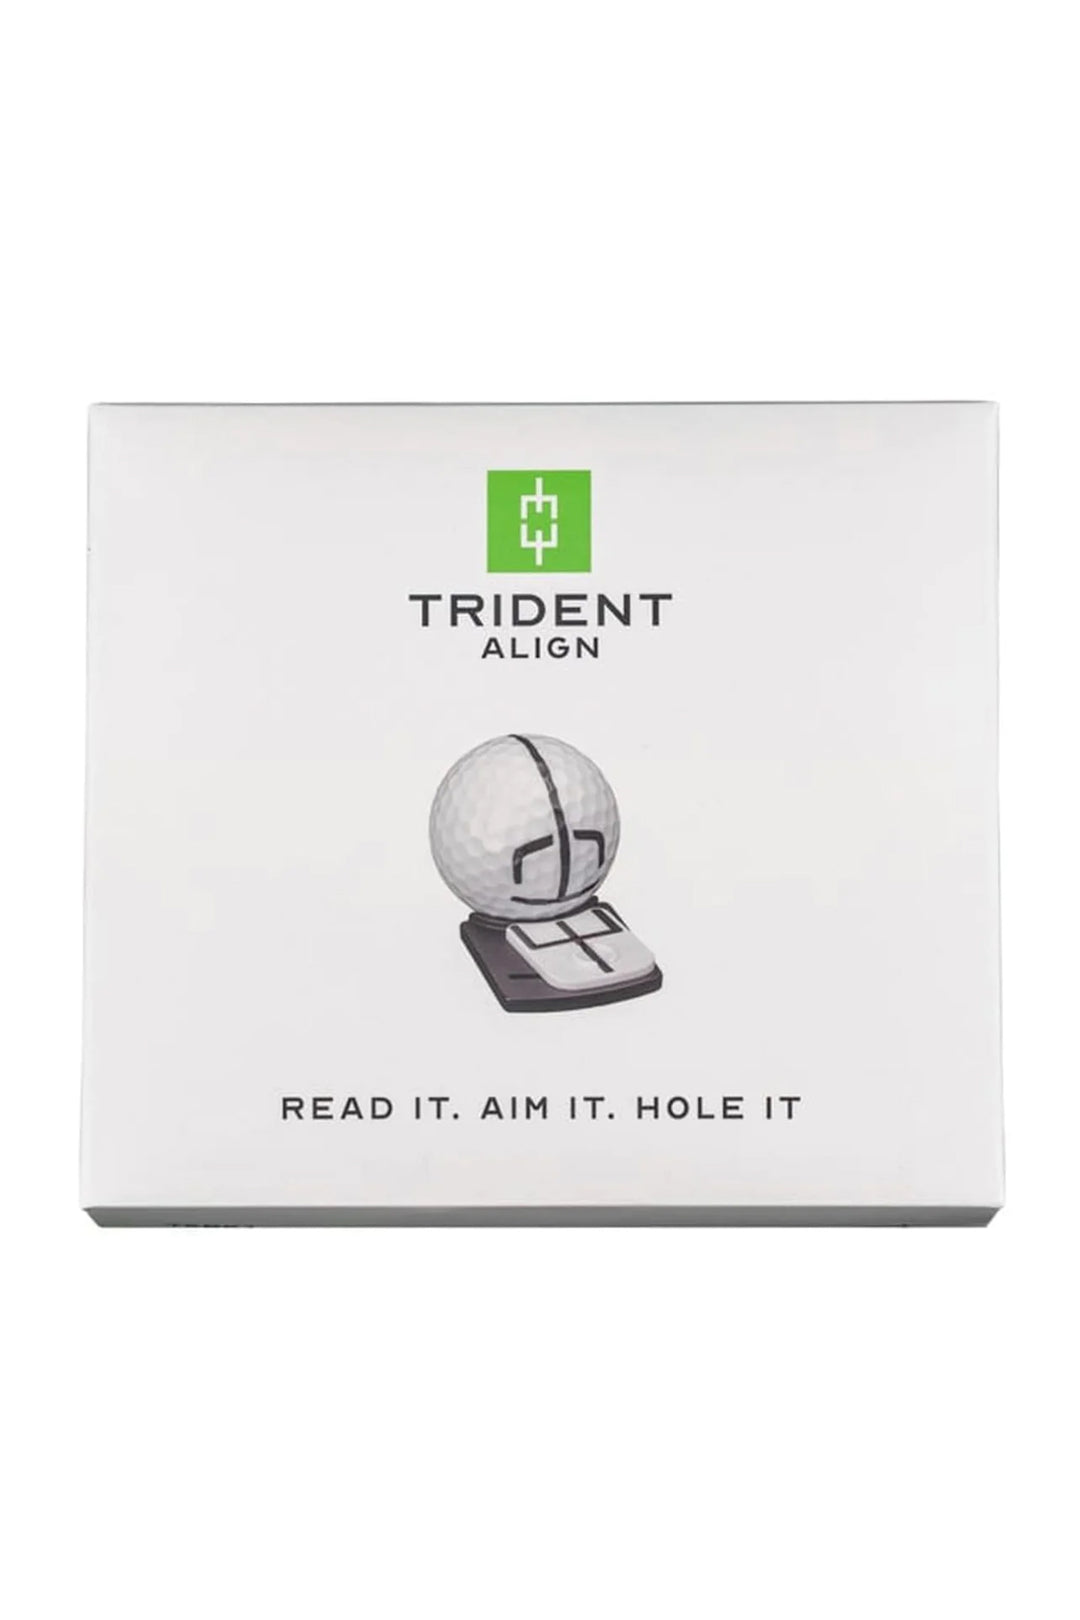 Trident Align - World's First Adjustable Golf Ball Marker